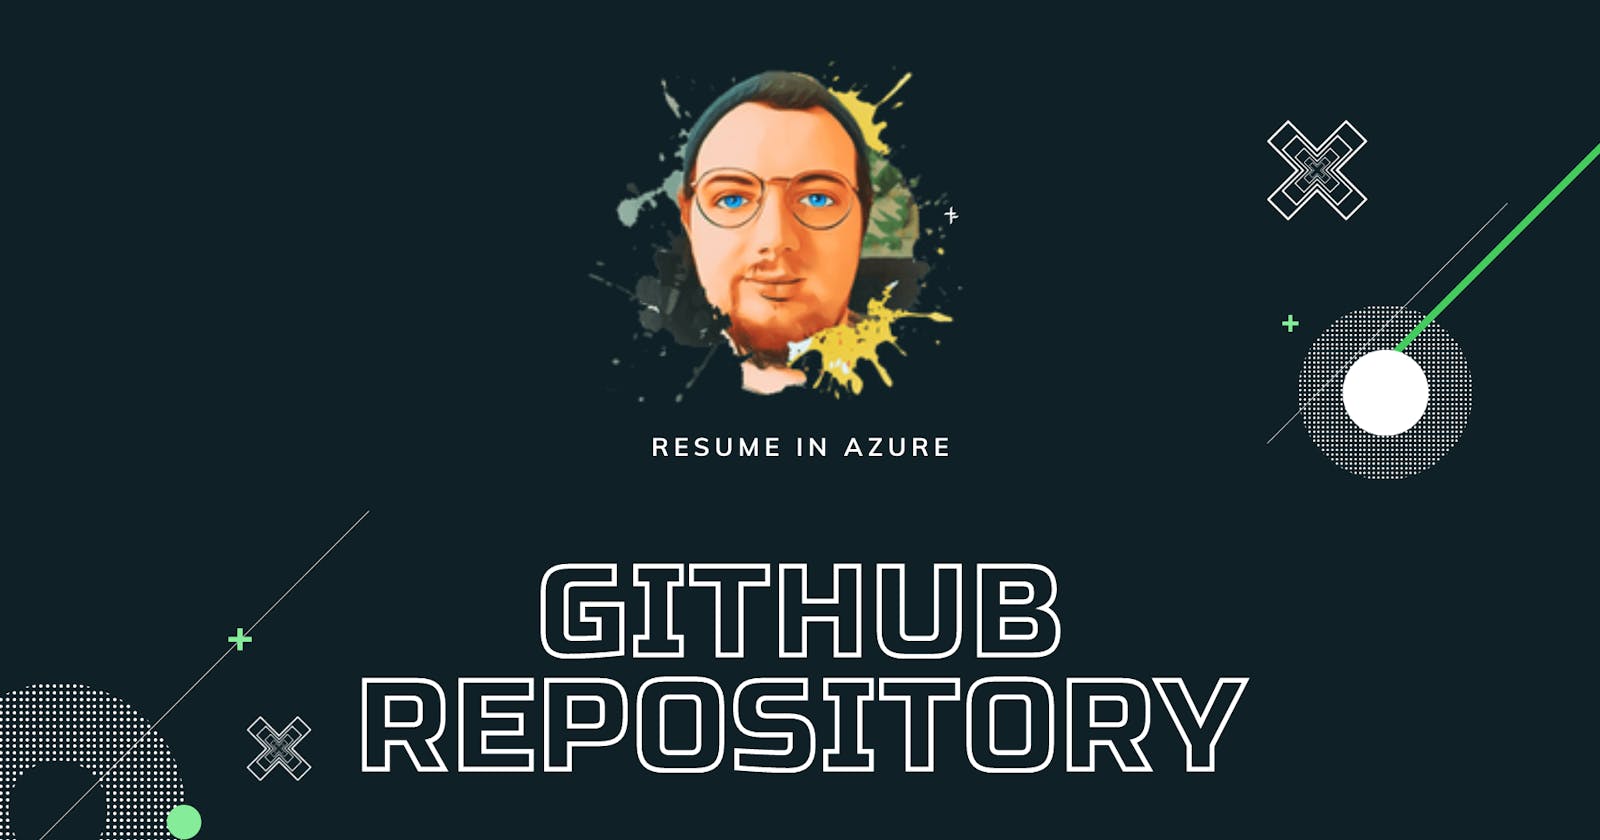 Resume in Azure #02: GitHub Repository